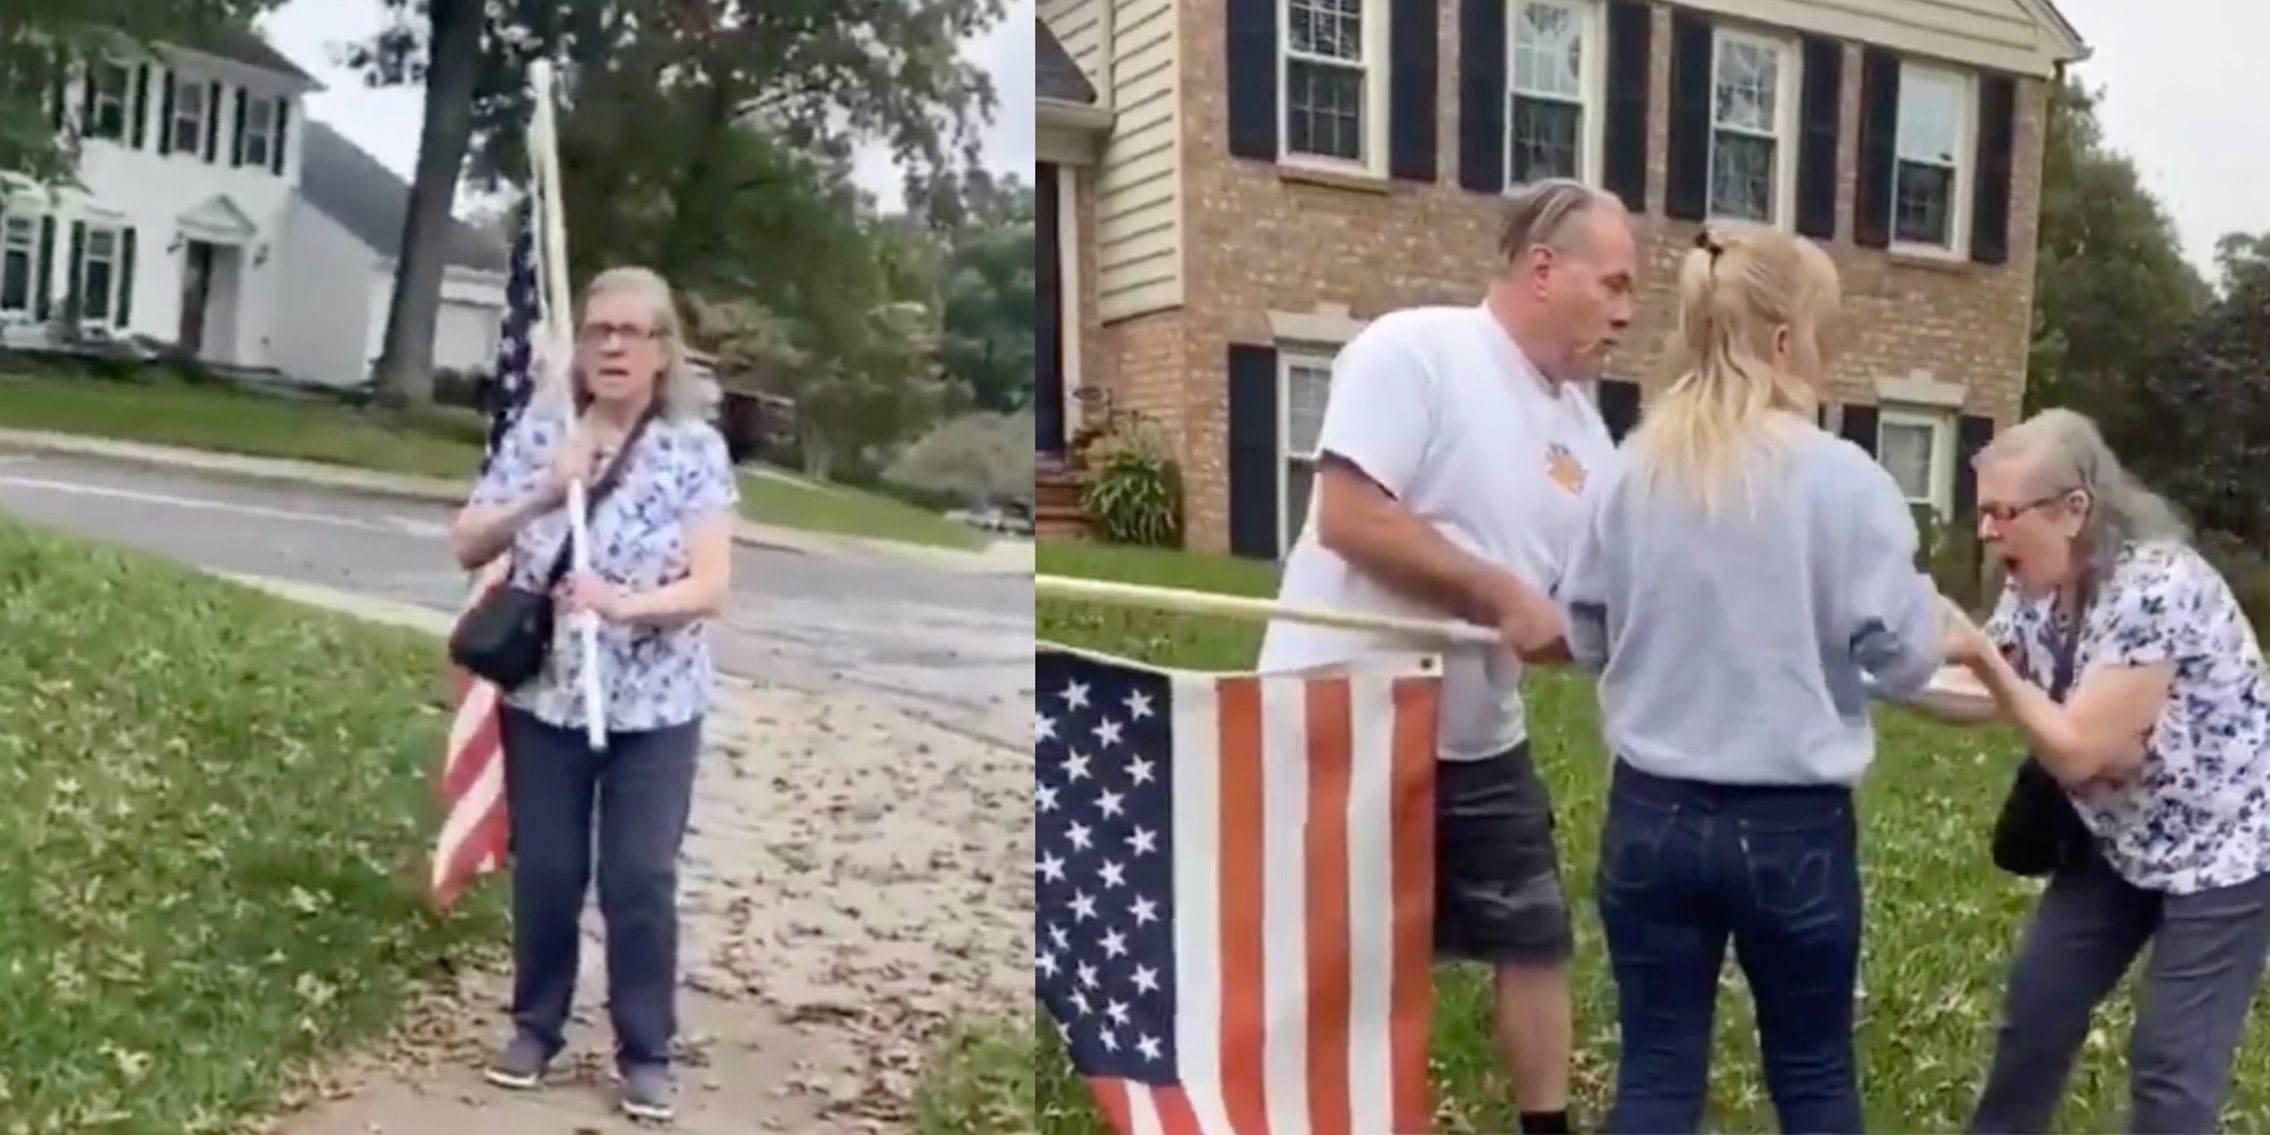 Karen seen threatening people with her American flag